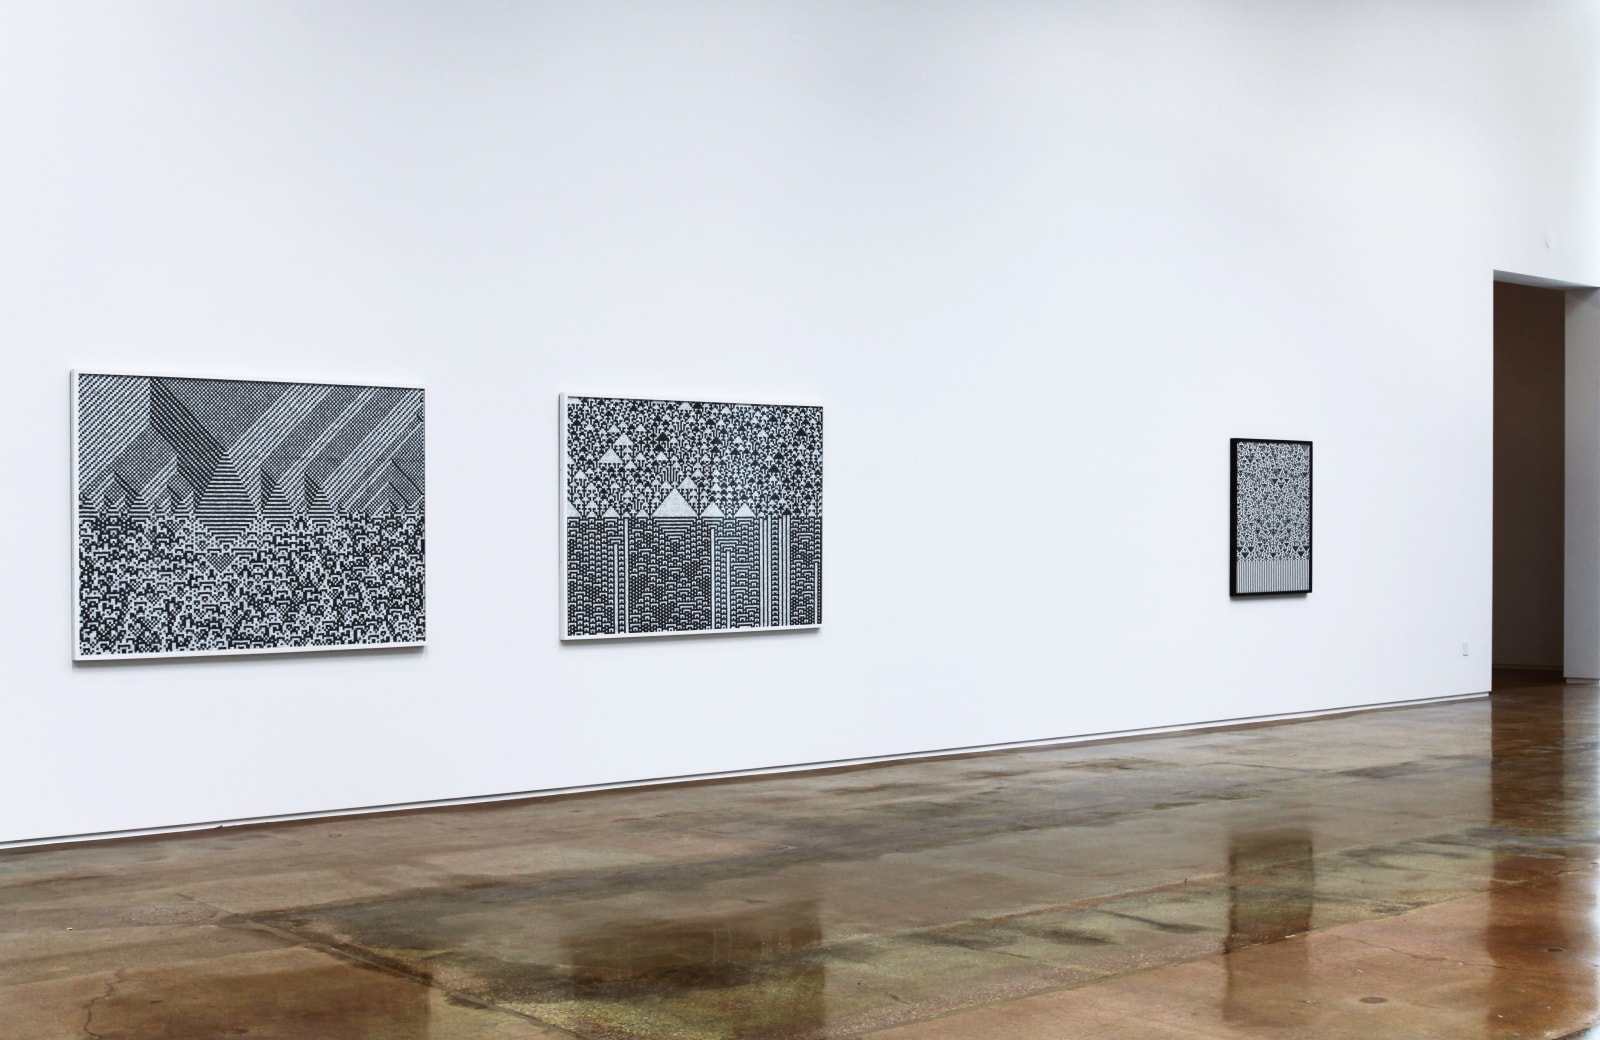 Installation View, Cartography of Control, Kohn Gallery, Los Angeles (2015) | Photo: Studio Troika